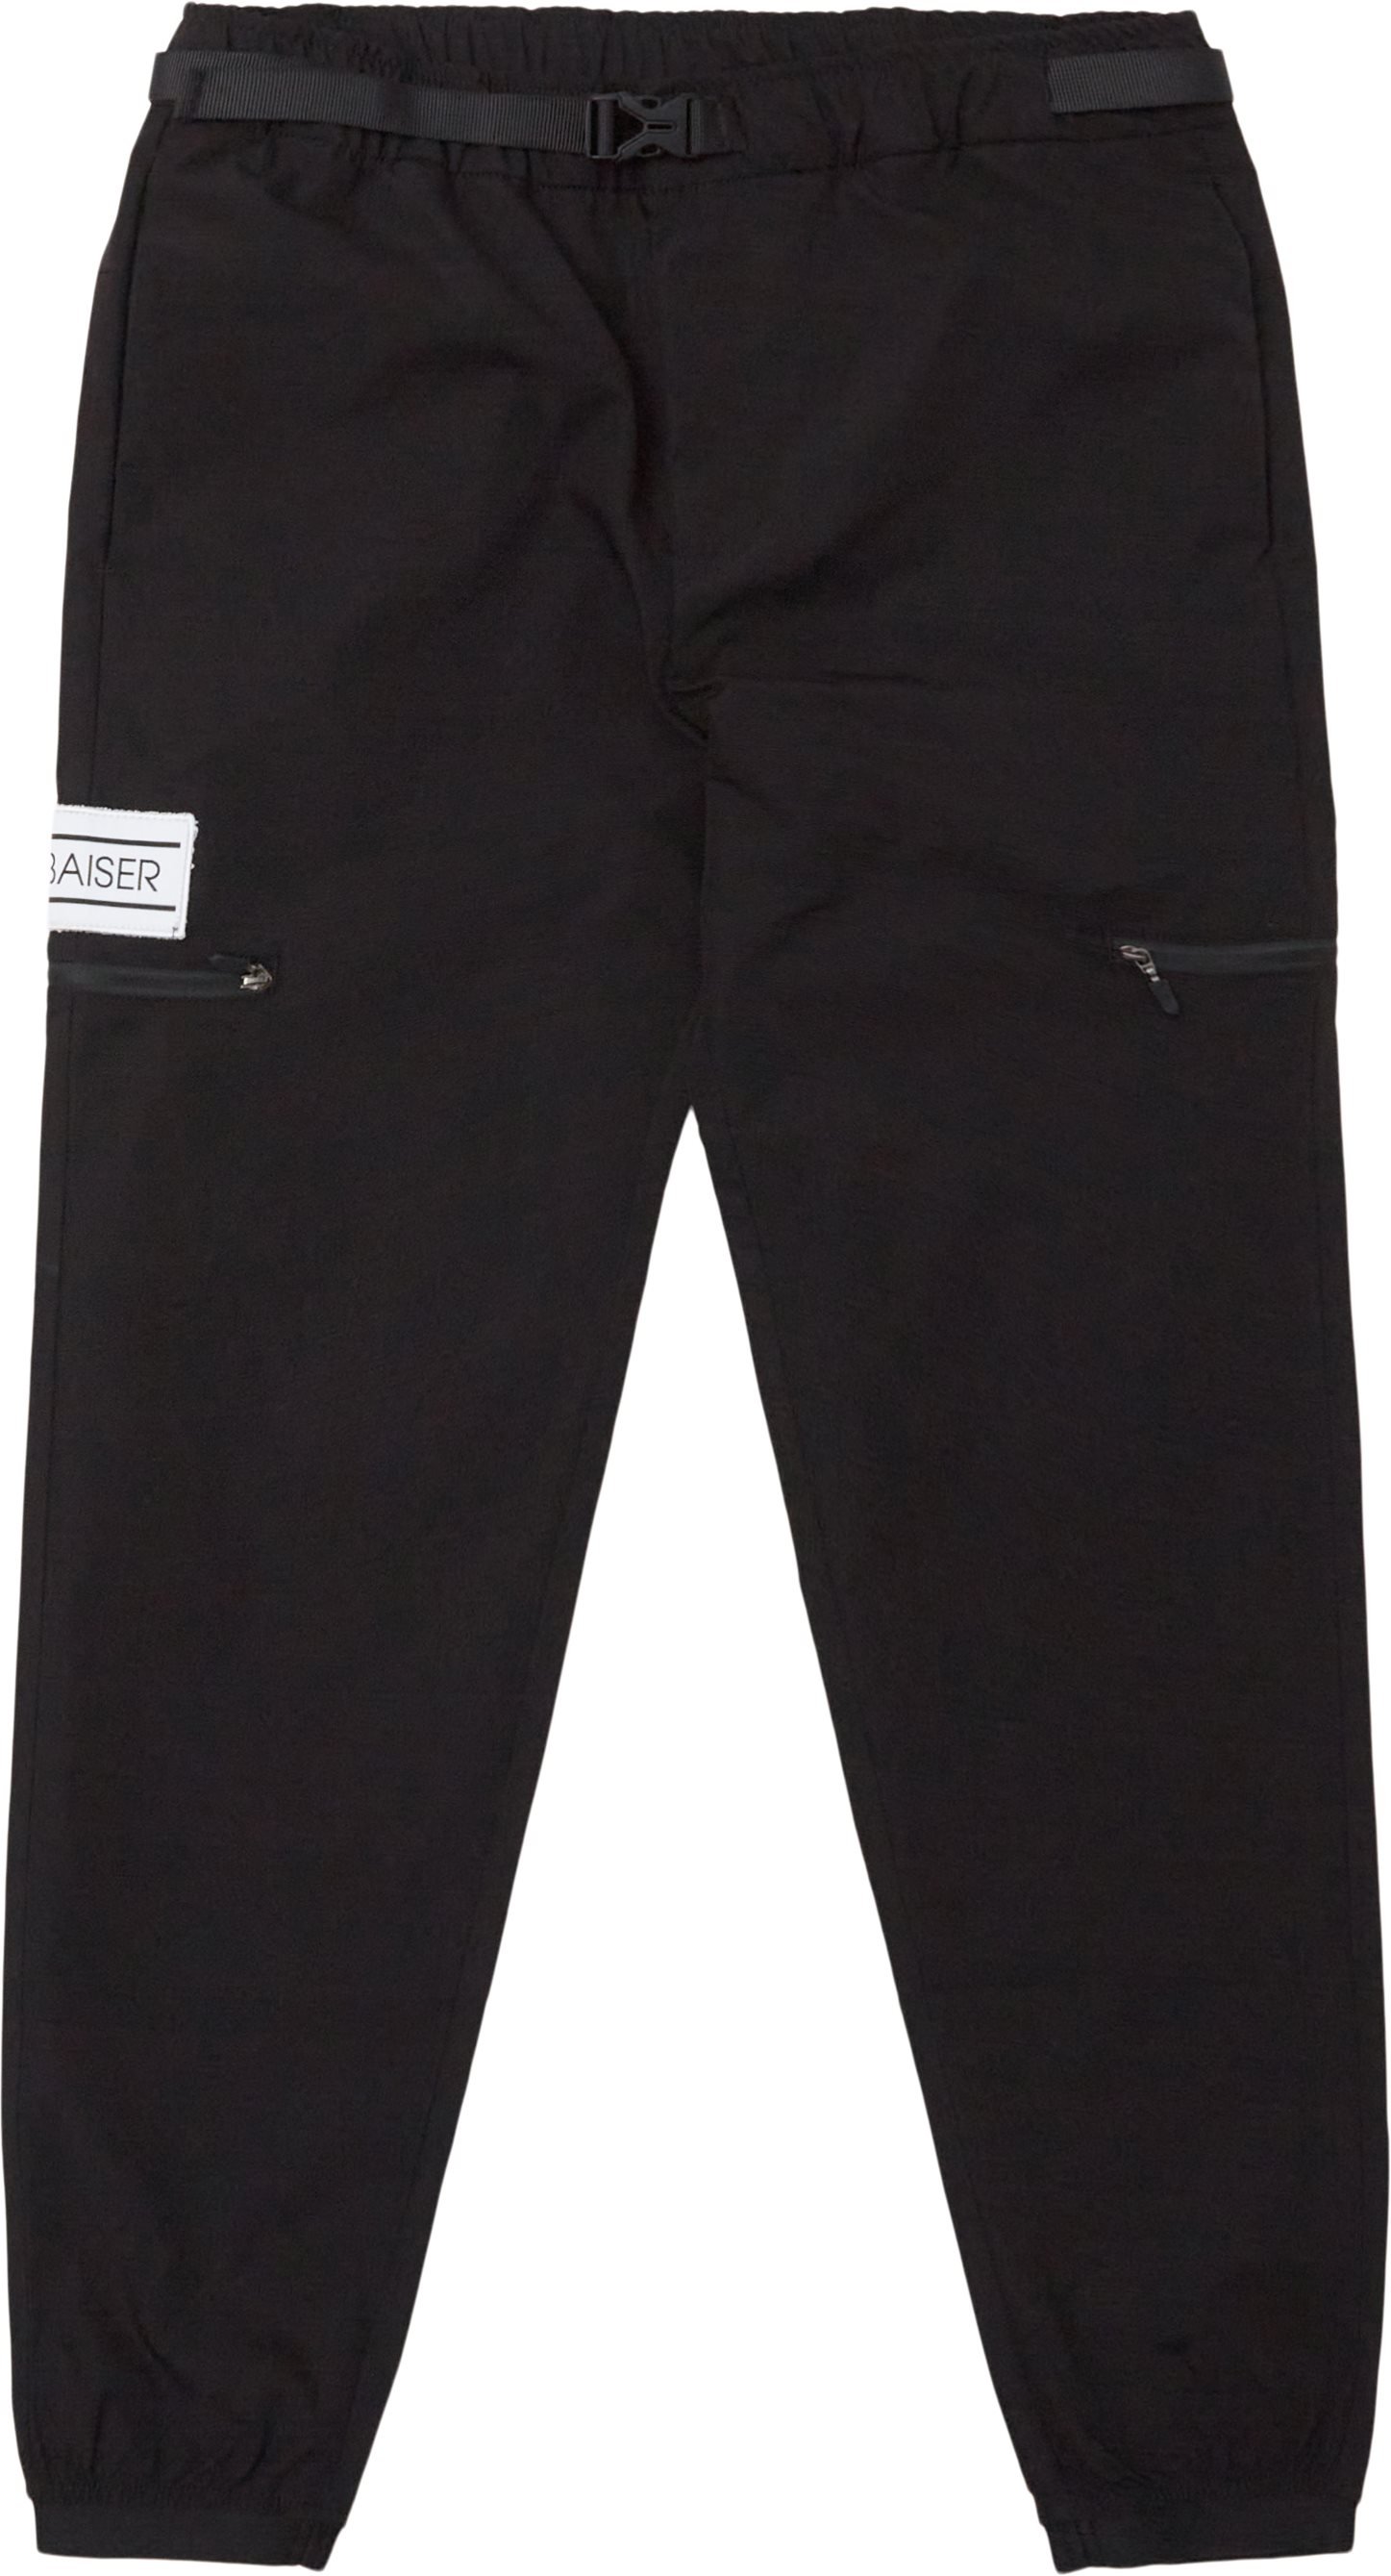 Normandy Pants - Regular fit - Black